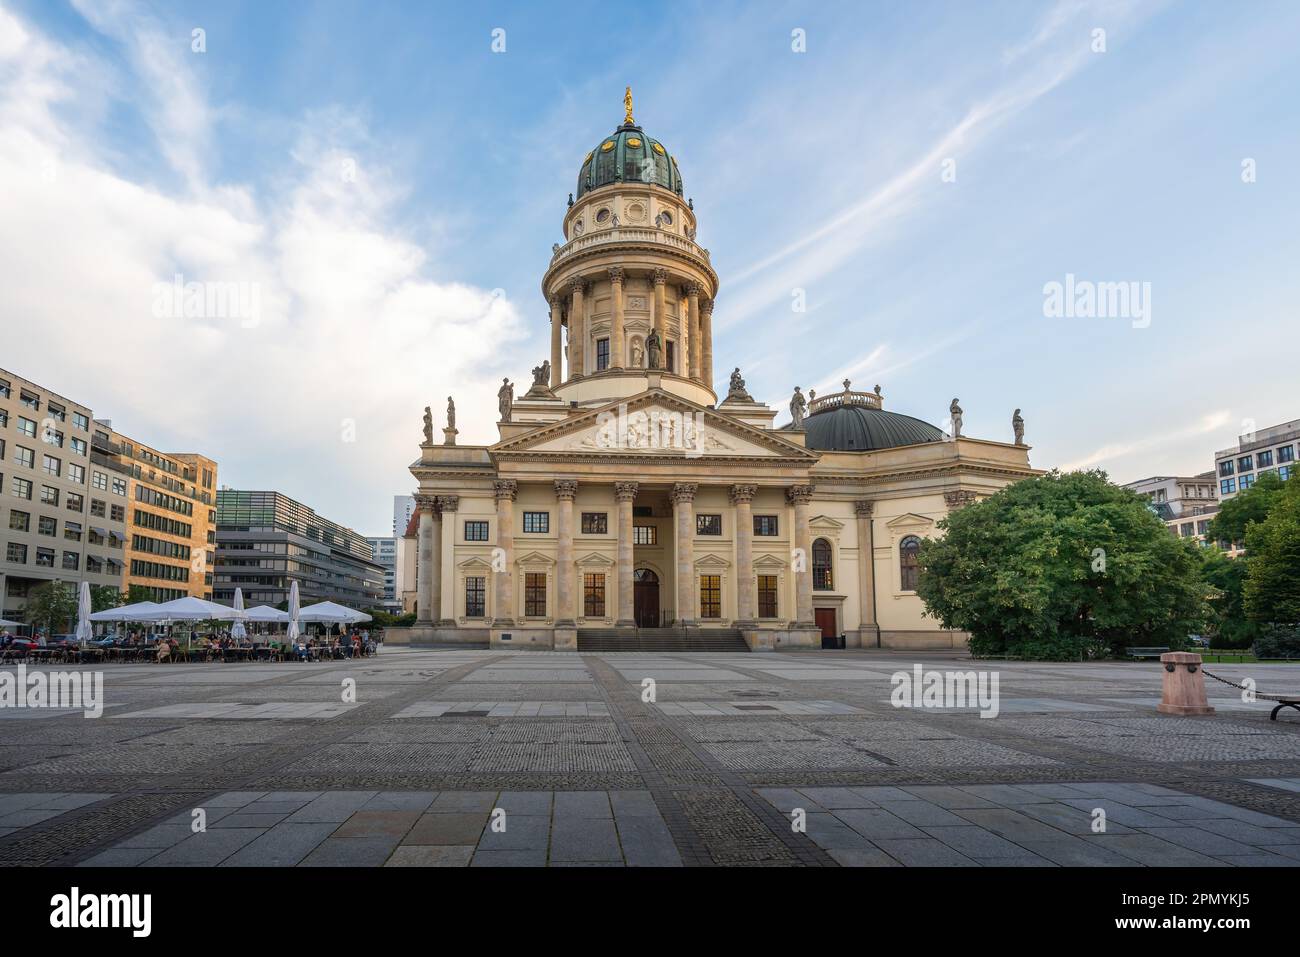 Cattedrale tedesca in Piazza Gendarmenmarkt - Berlino, Germania Foto Stock